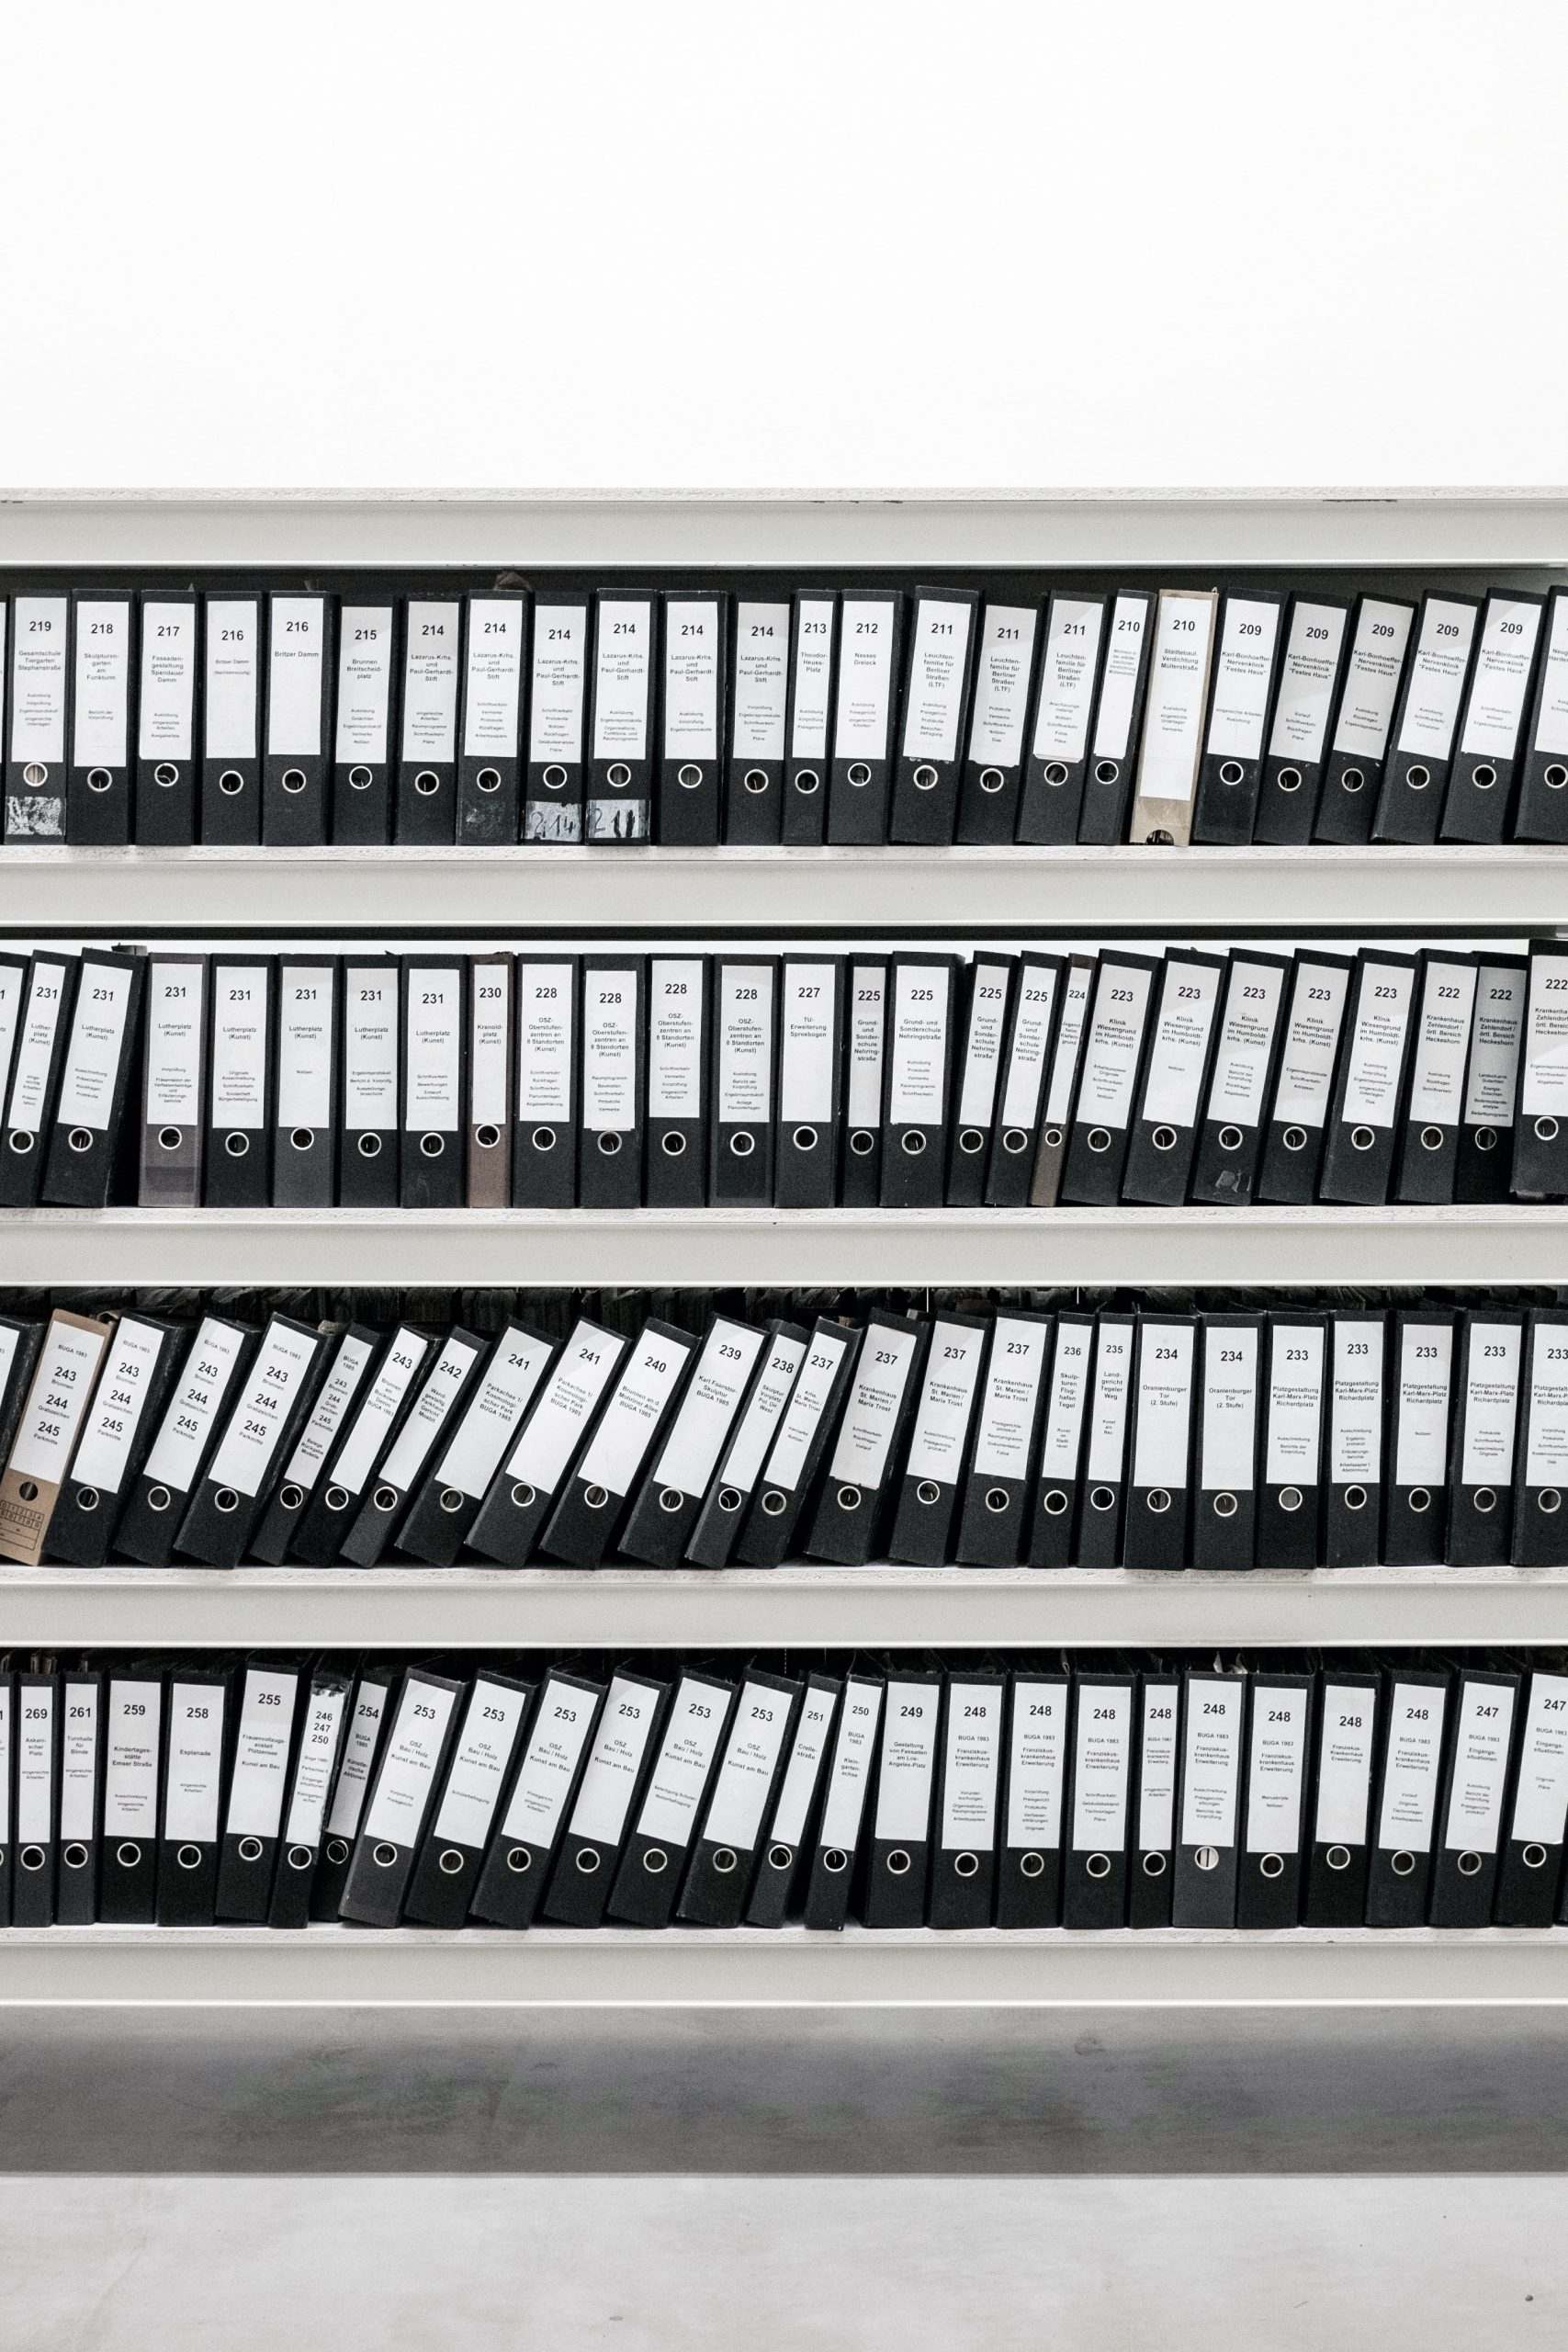 Vaping Legislation and Regulations files organized on a book rack